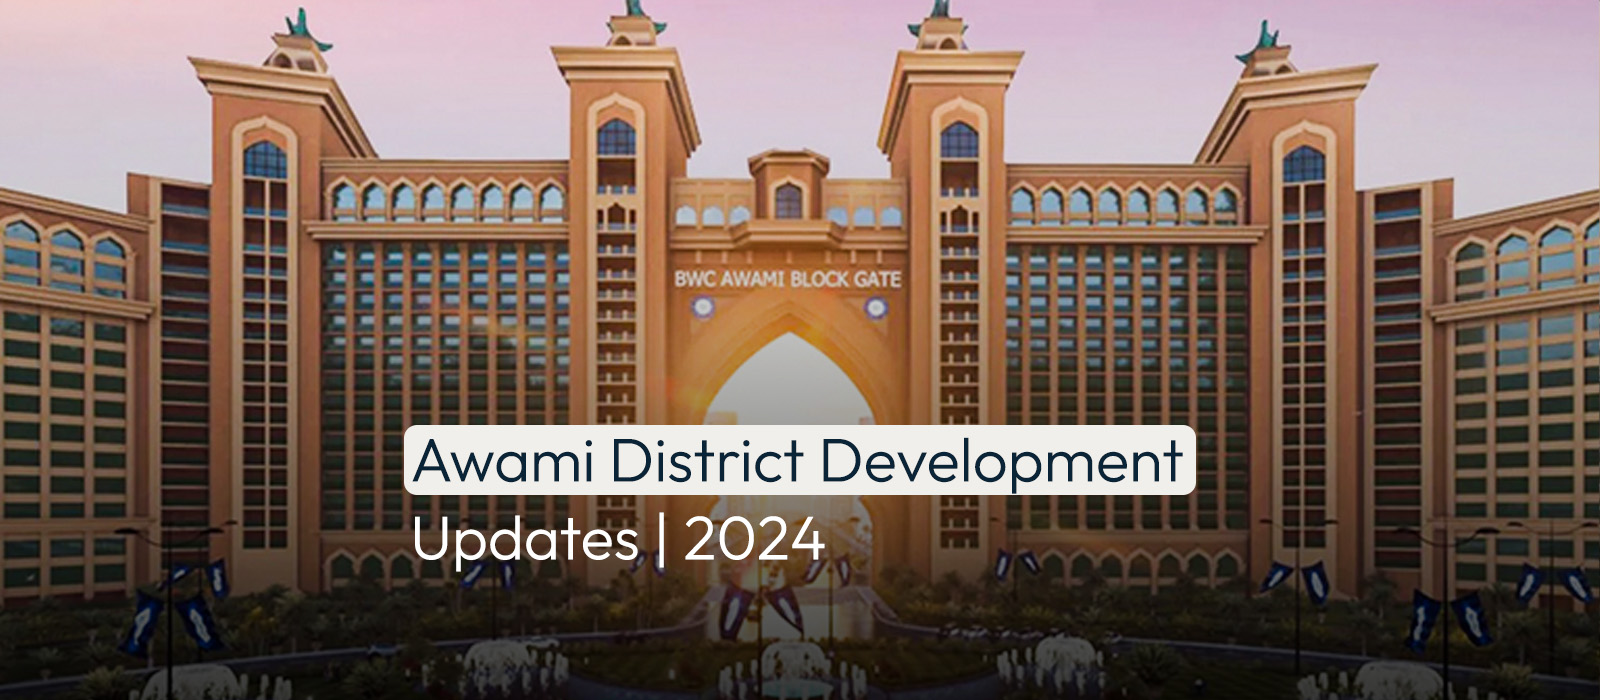 Awami District Development Updates | 2024